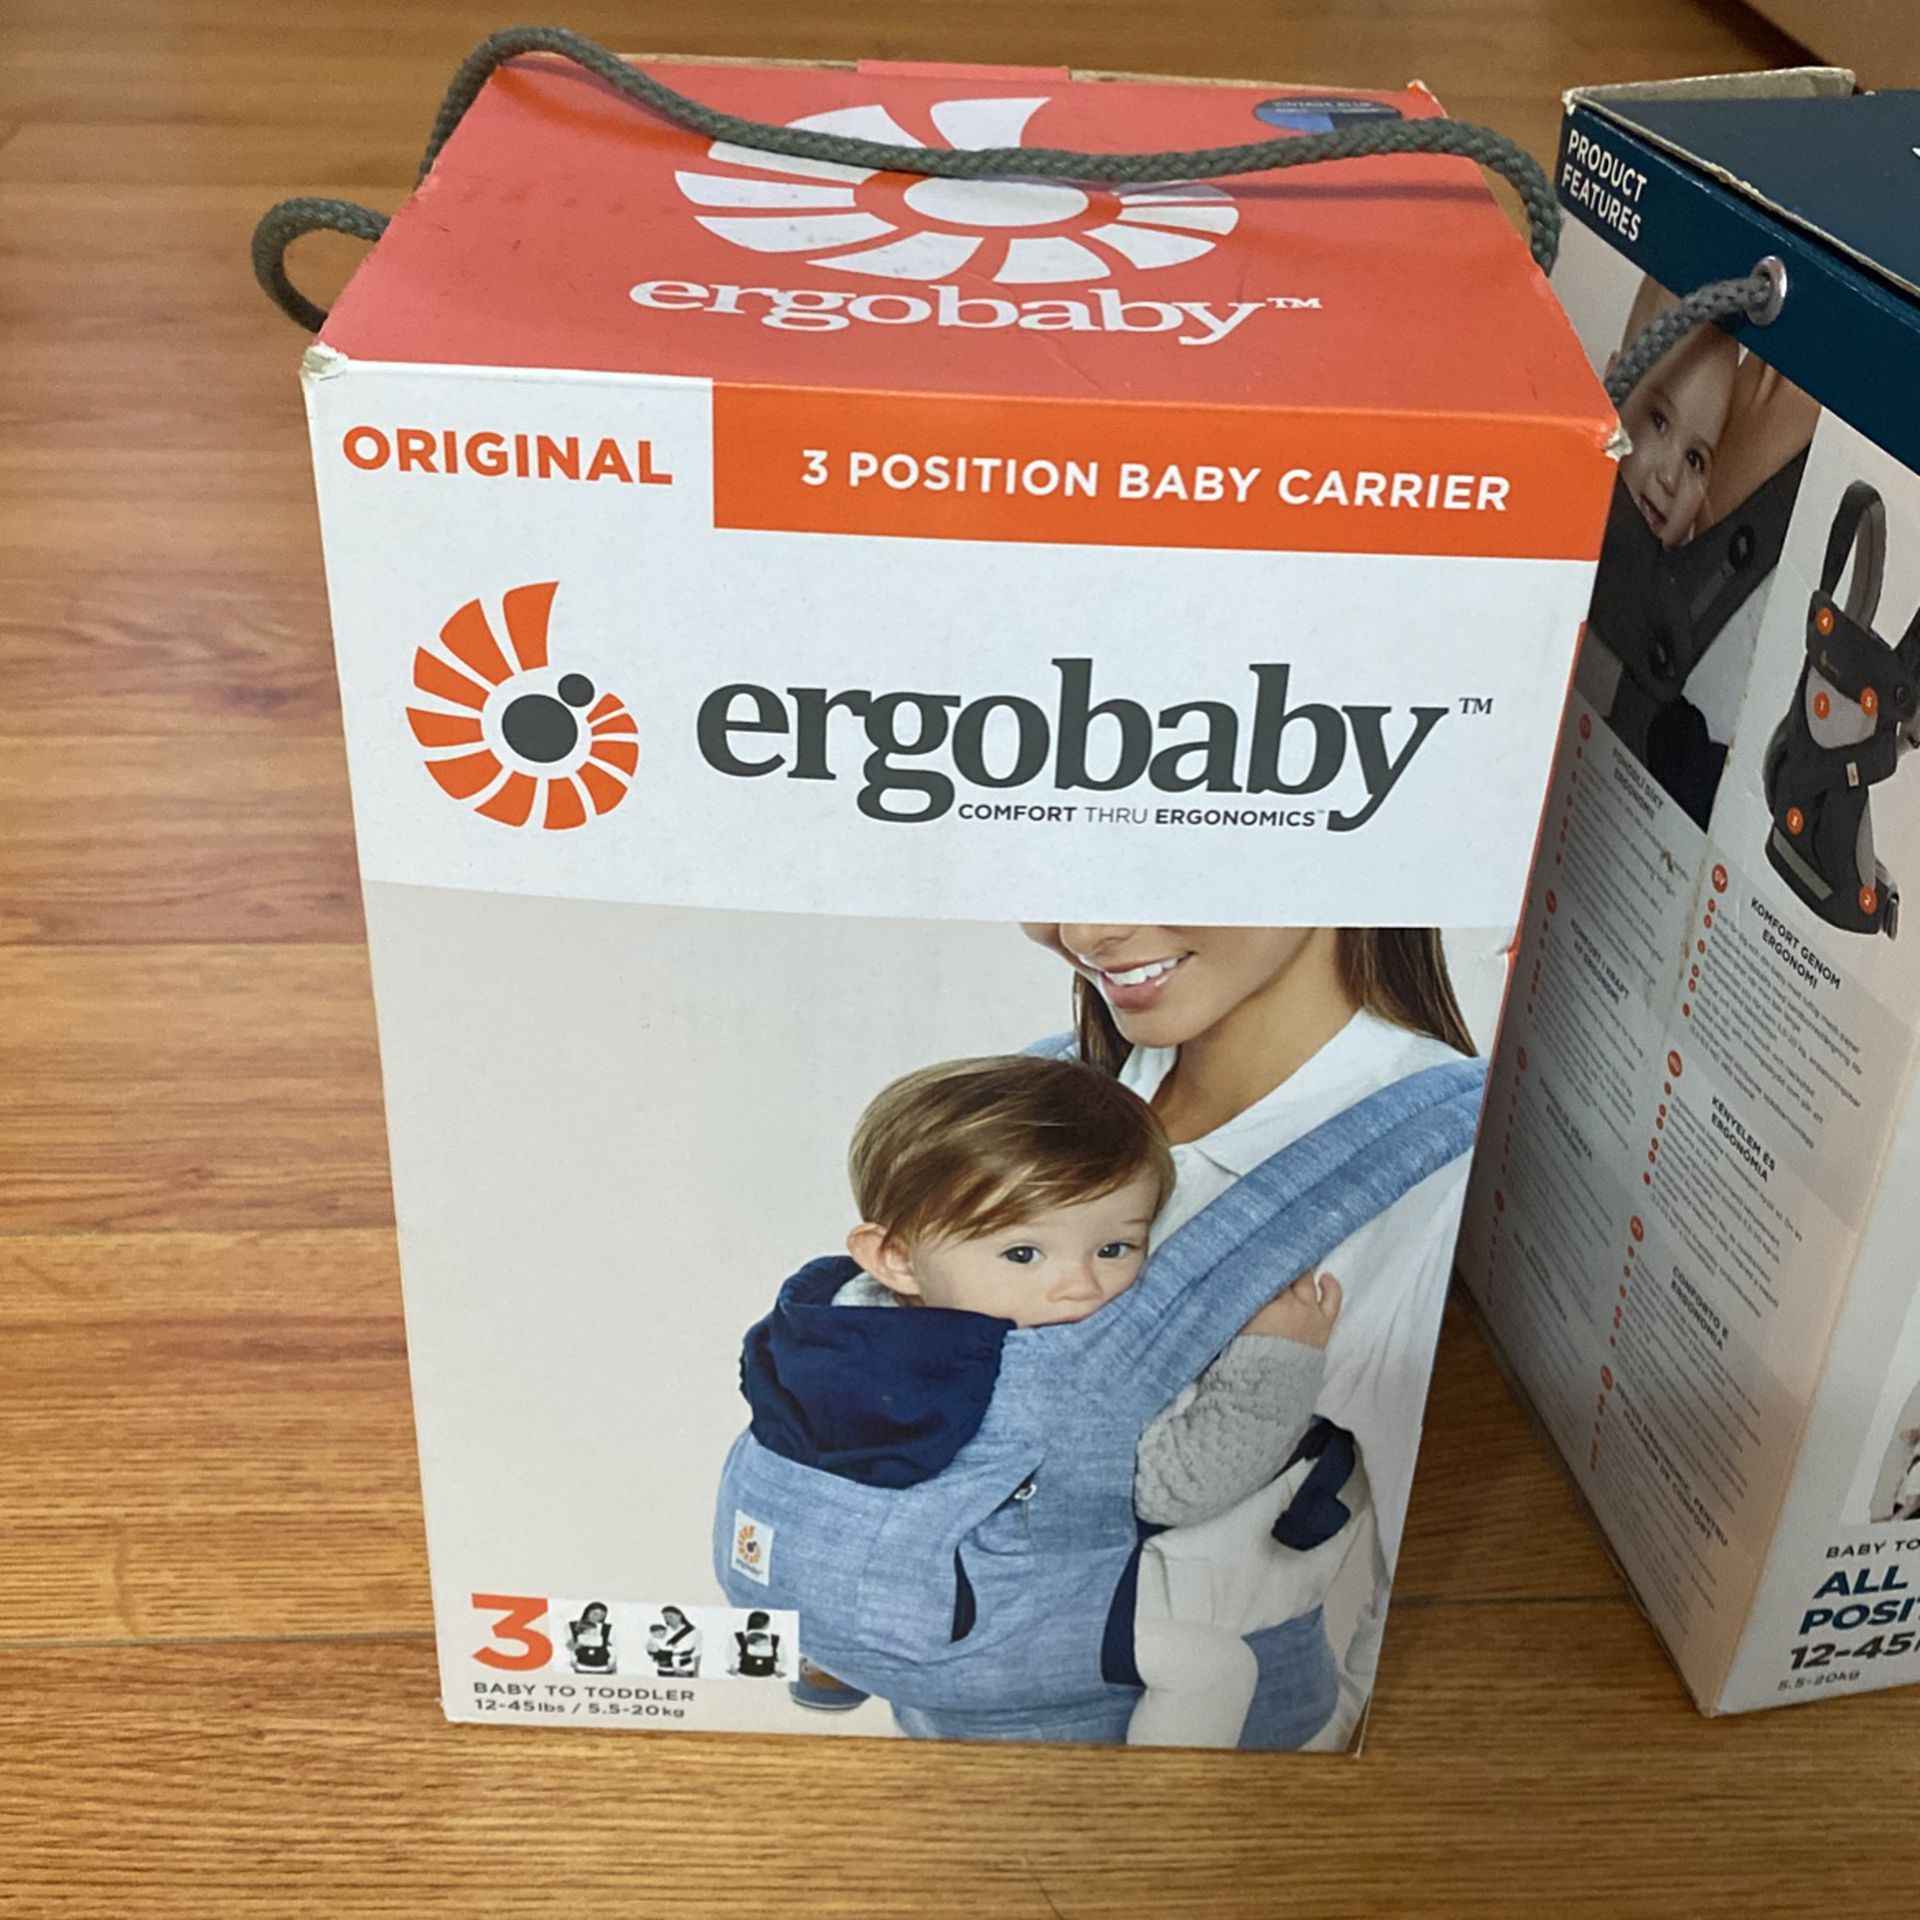 Ergobabay Baby Carrier Asking $160 For Both